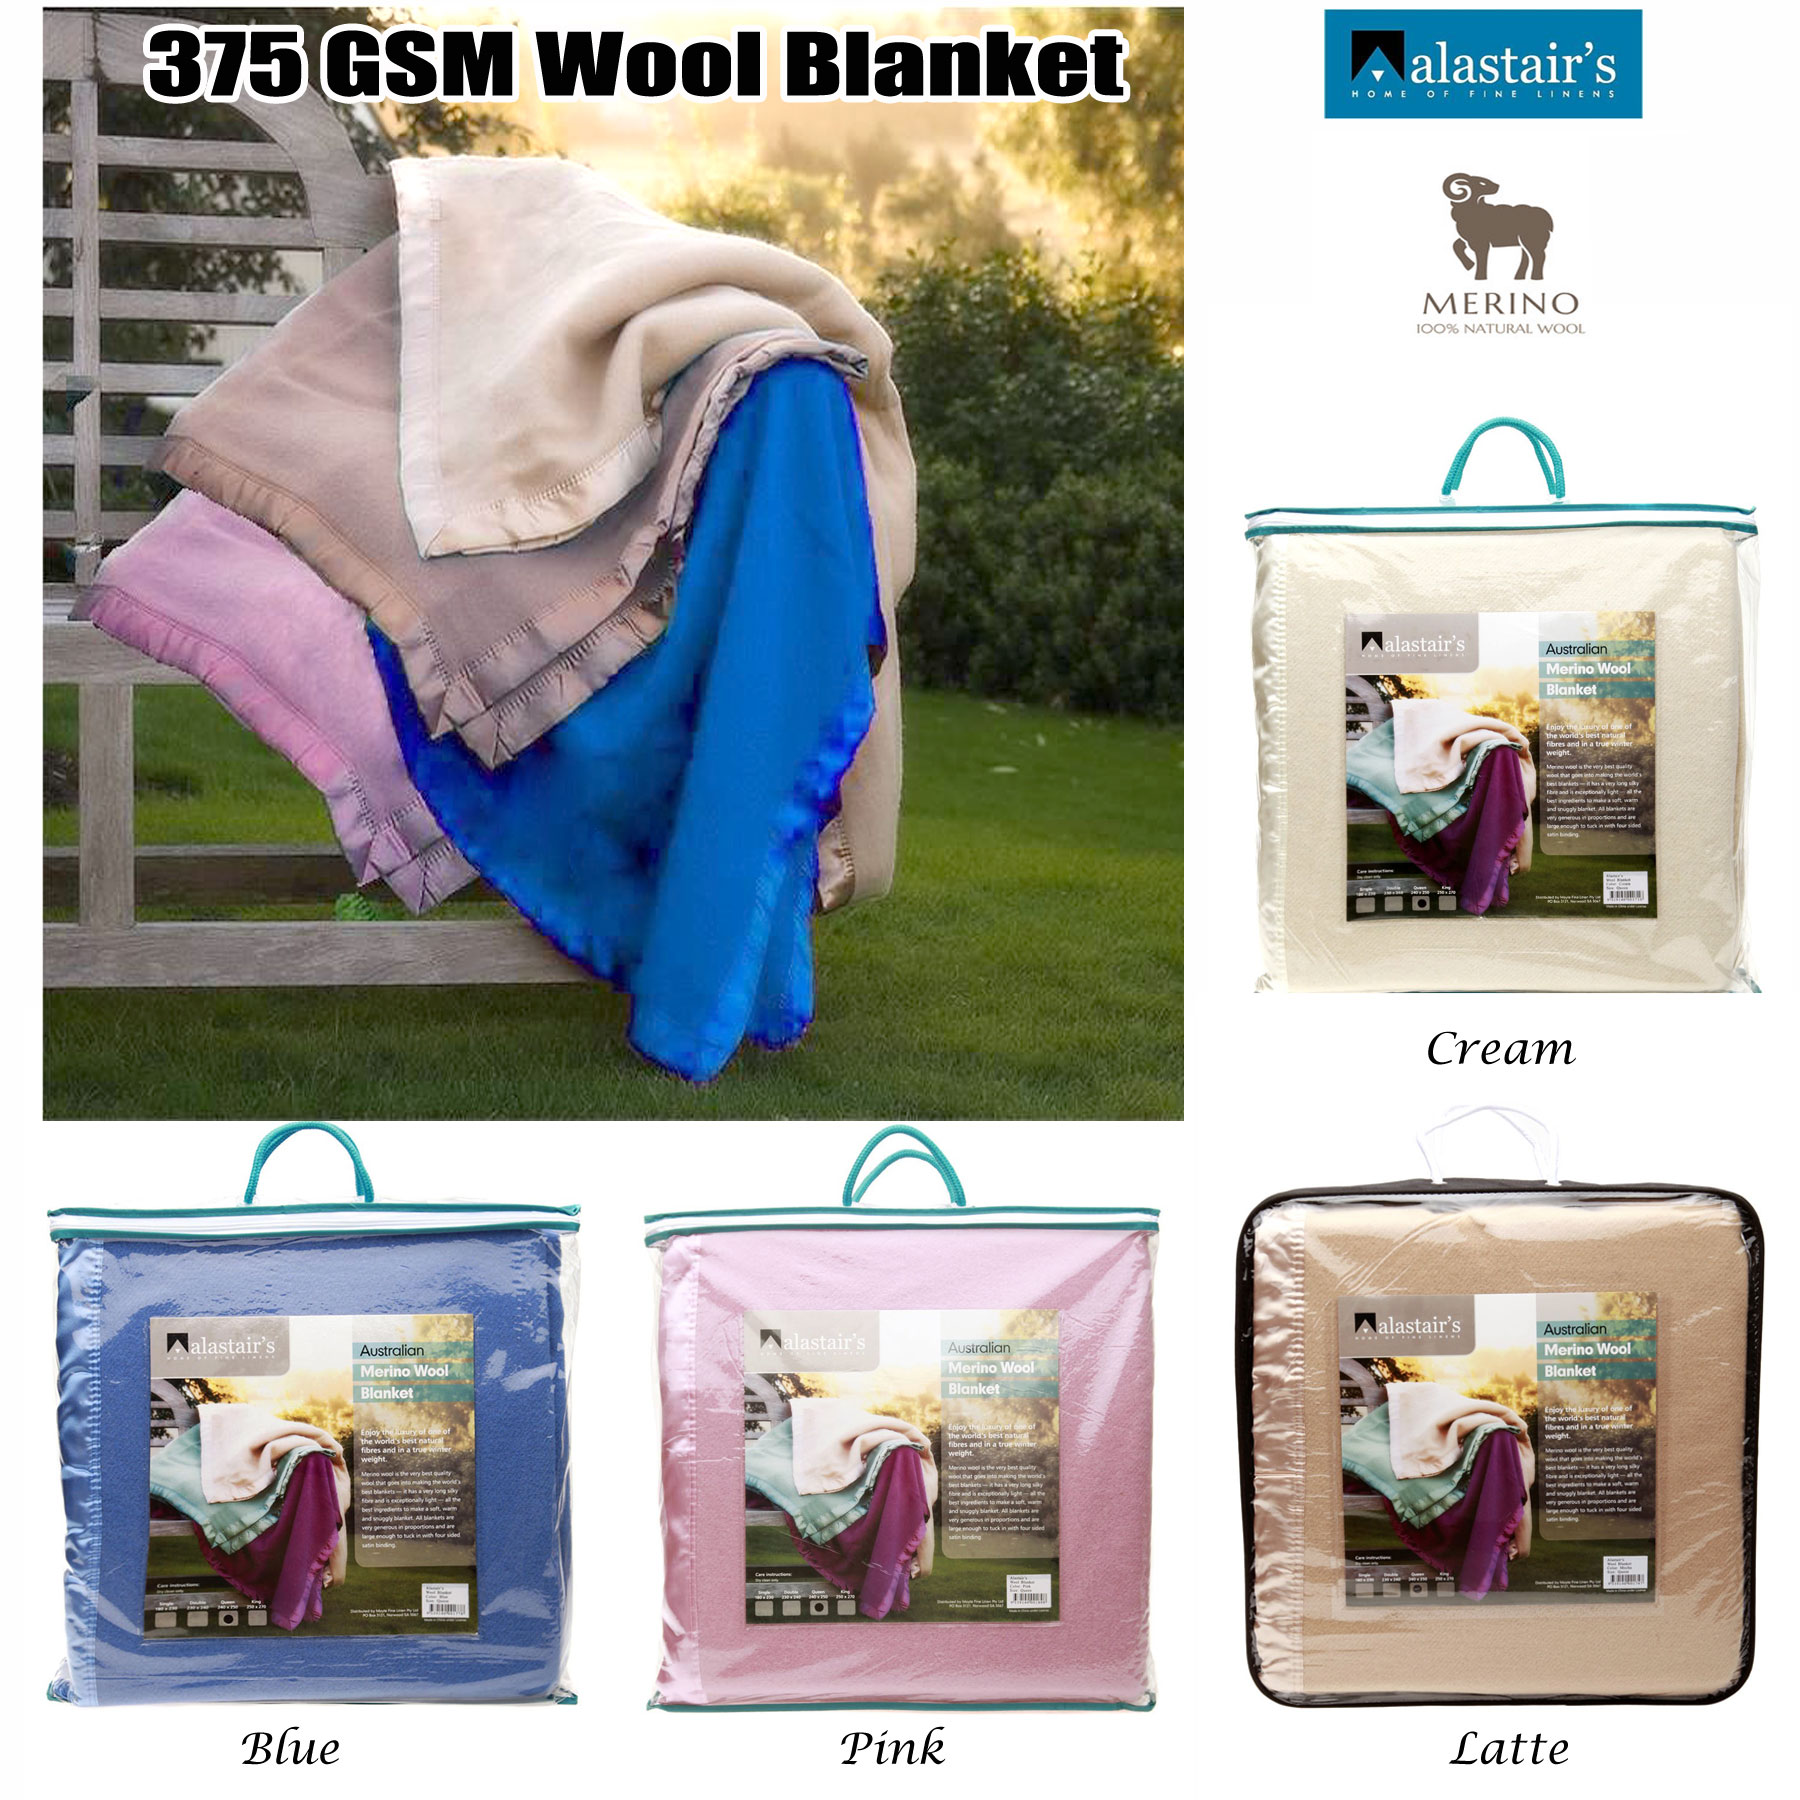 375GSM Australian Merino Wool Blanket by Alastairs - SINGLE DOUBLE QUEEN KING